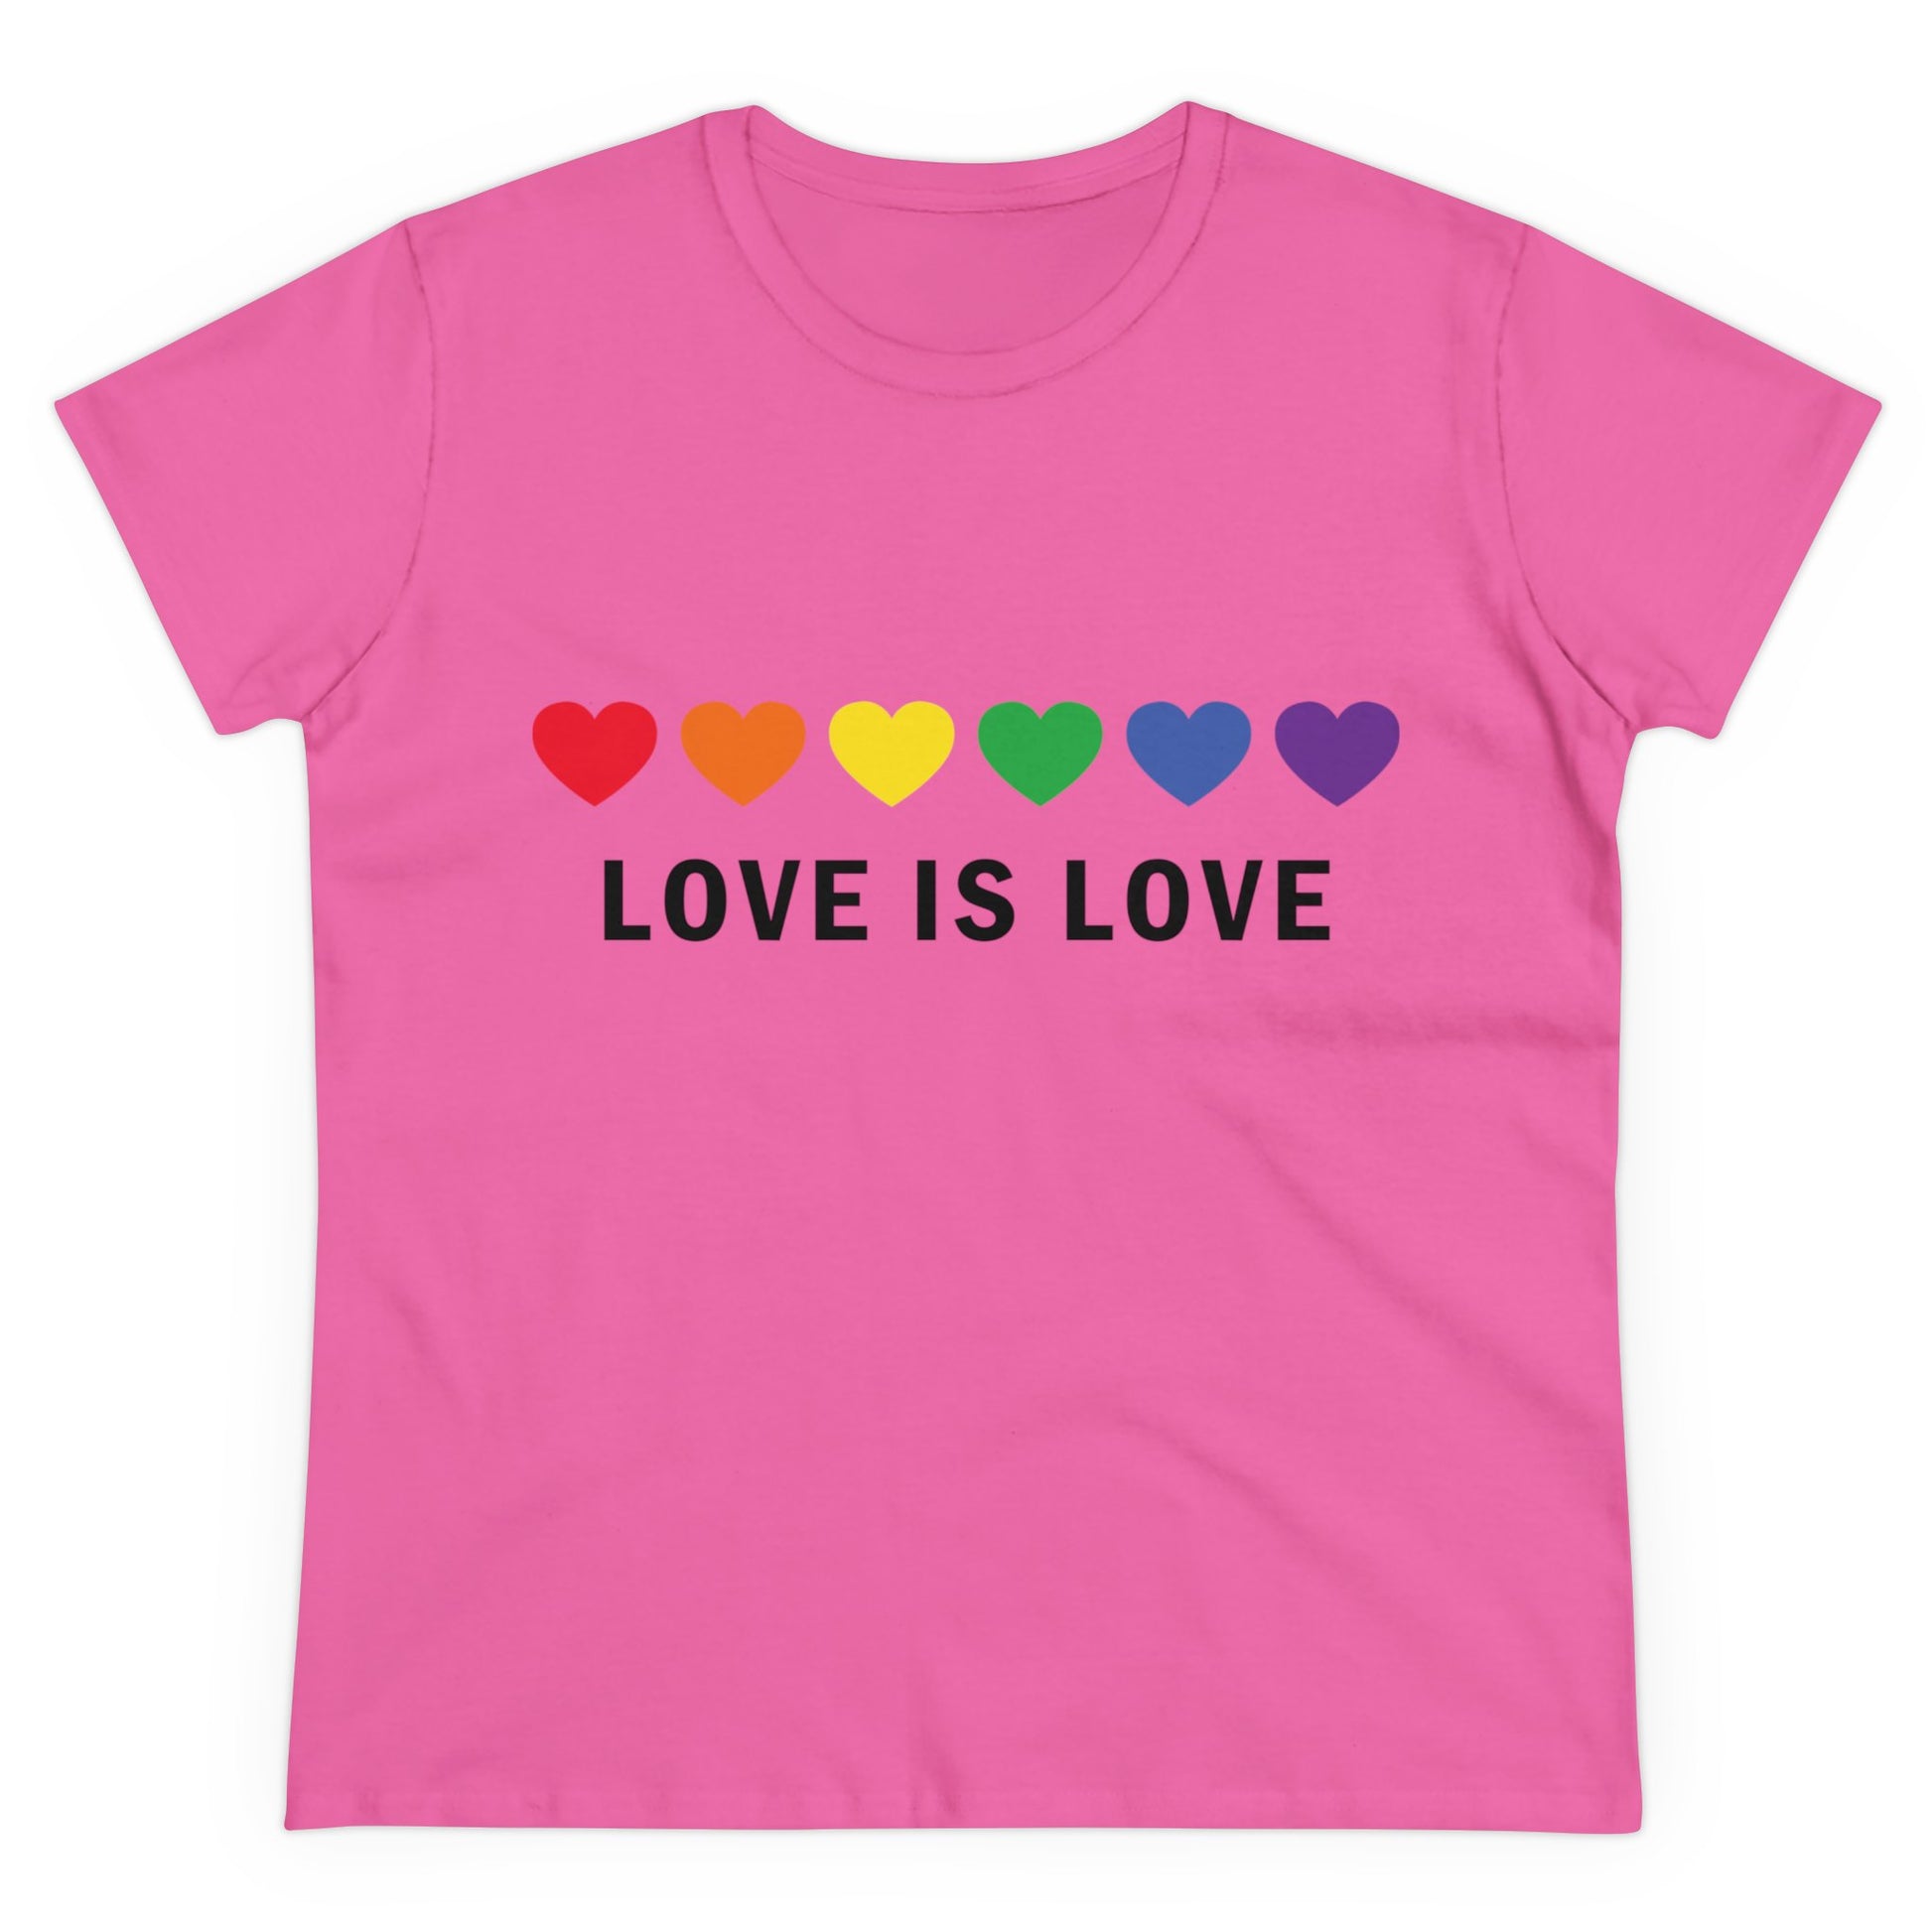 love is love shirt 2